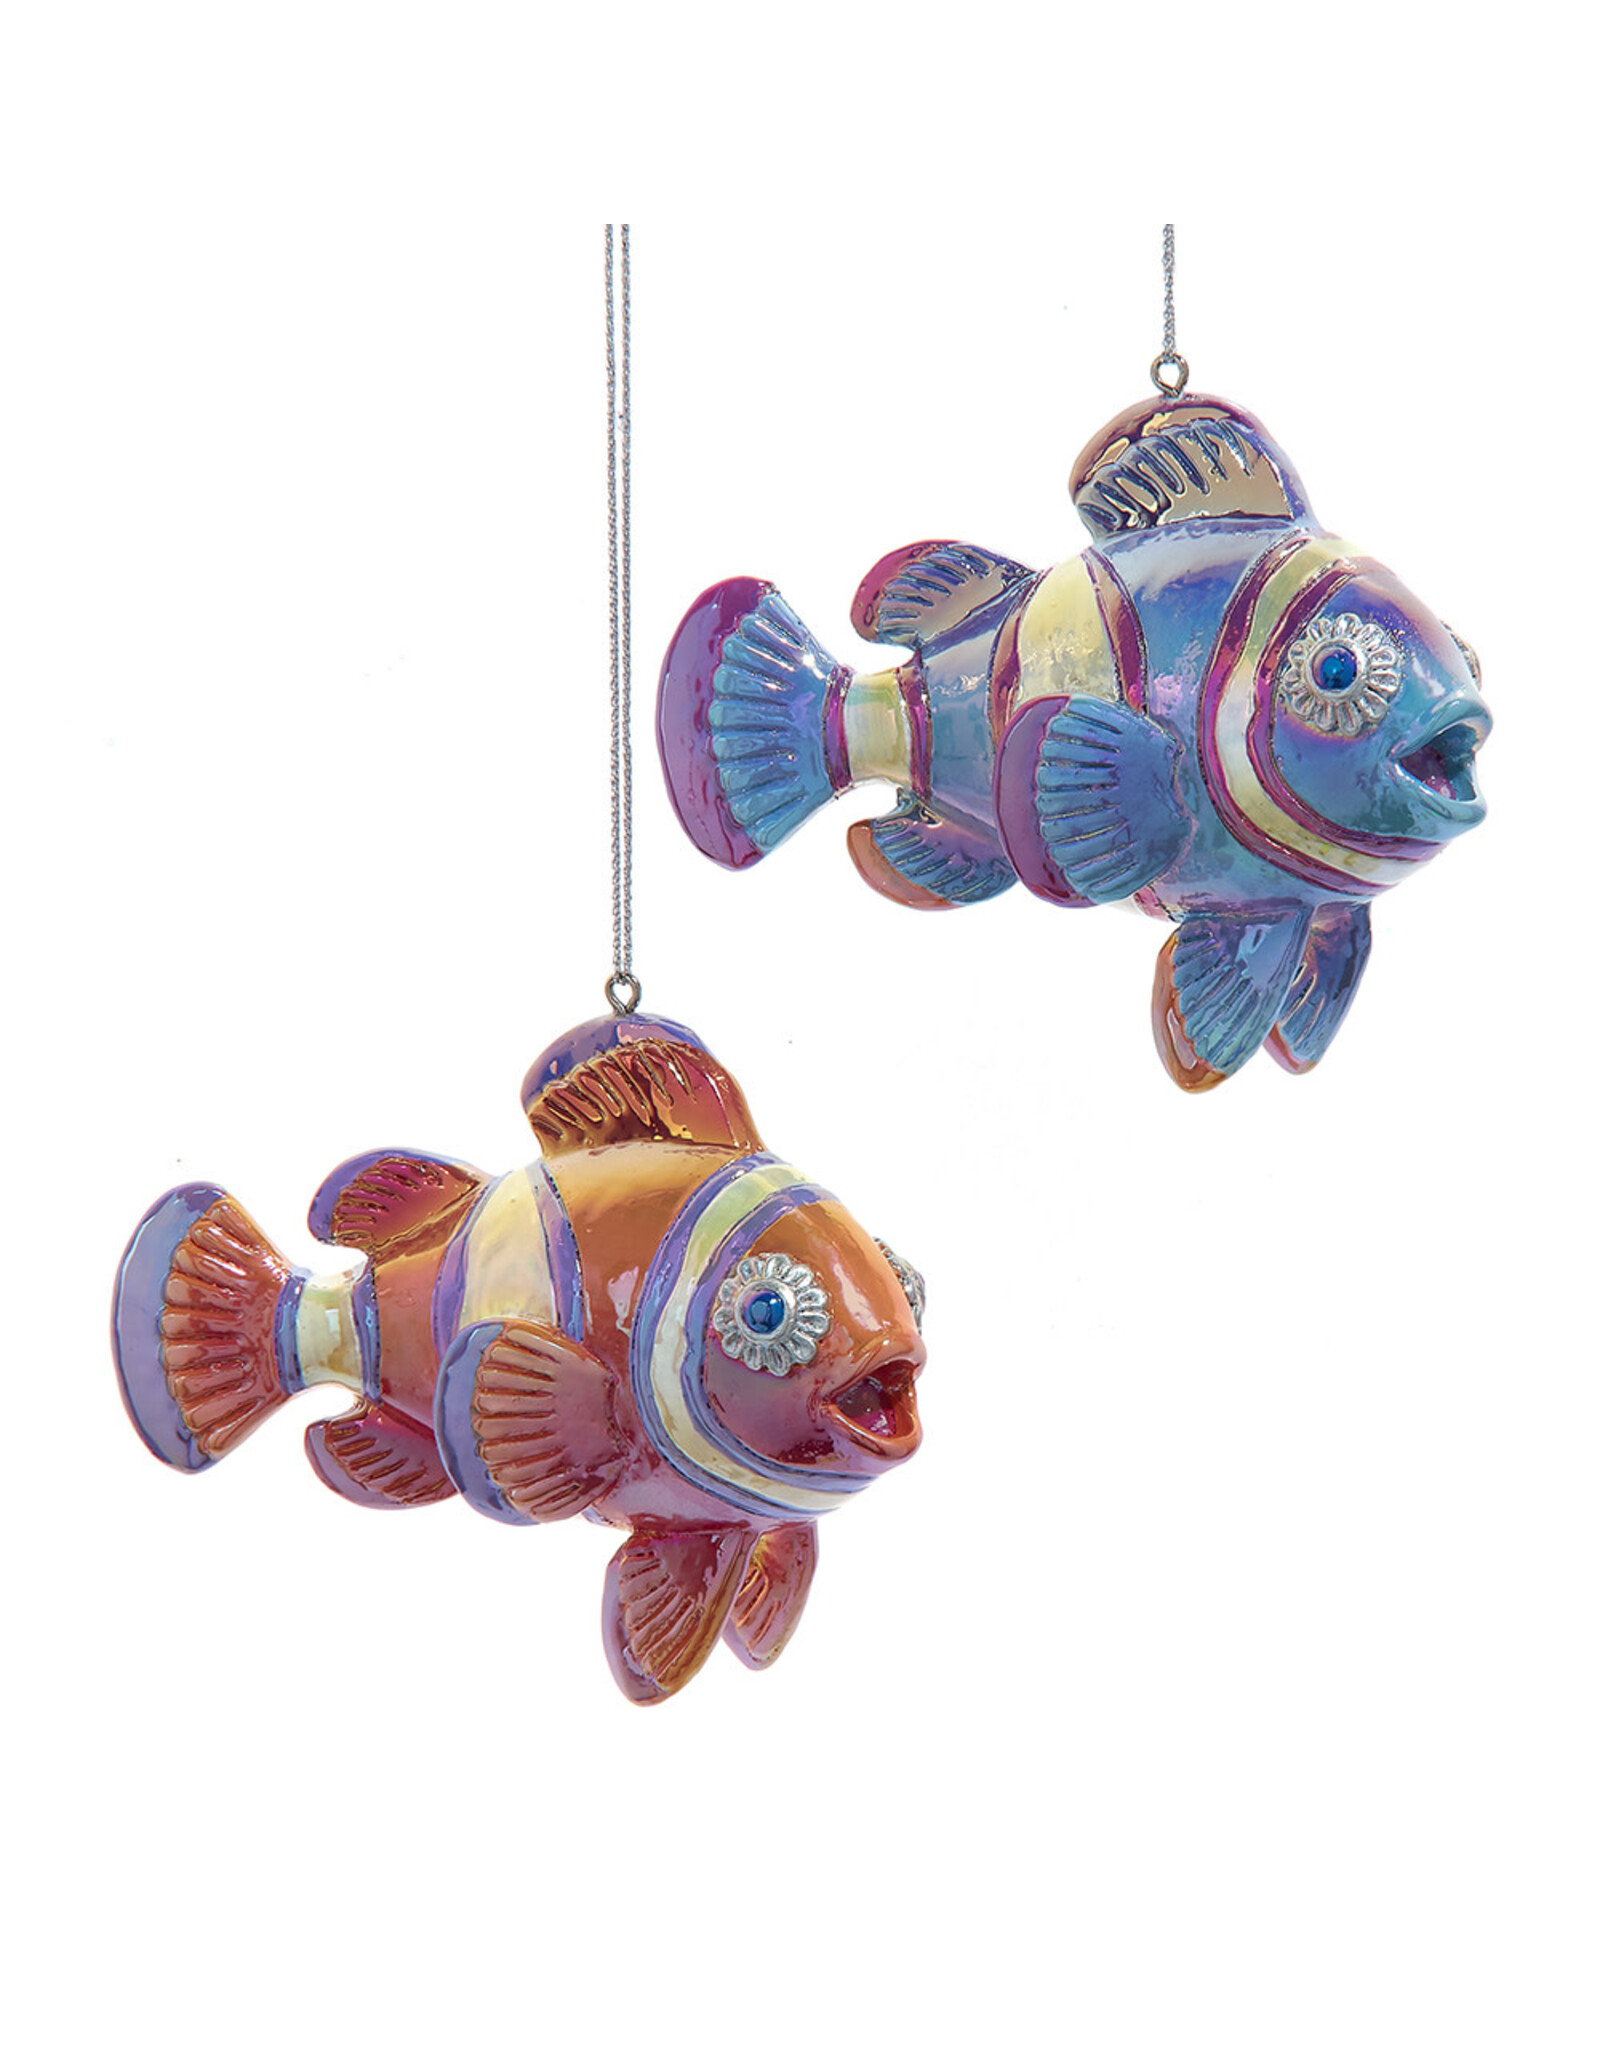 Kurt Adler Colorful Clown Fish Ornaments 2pc Set